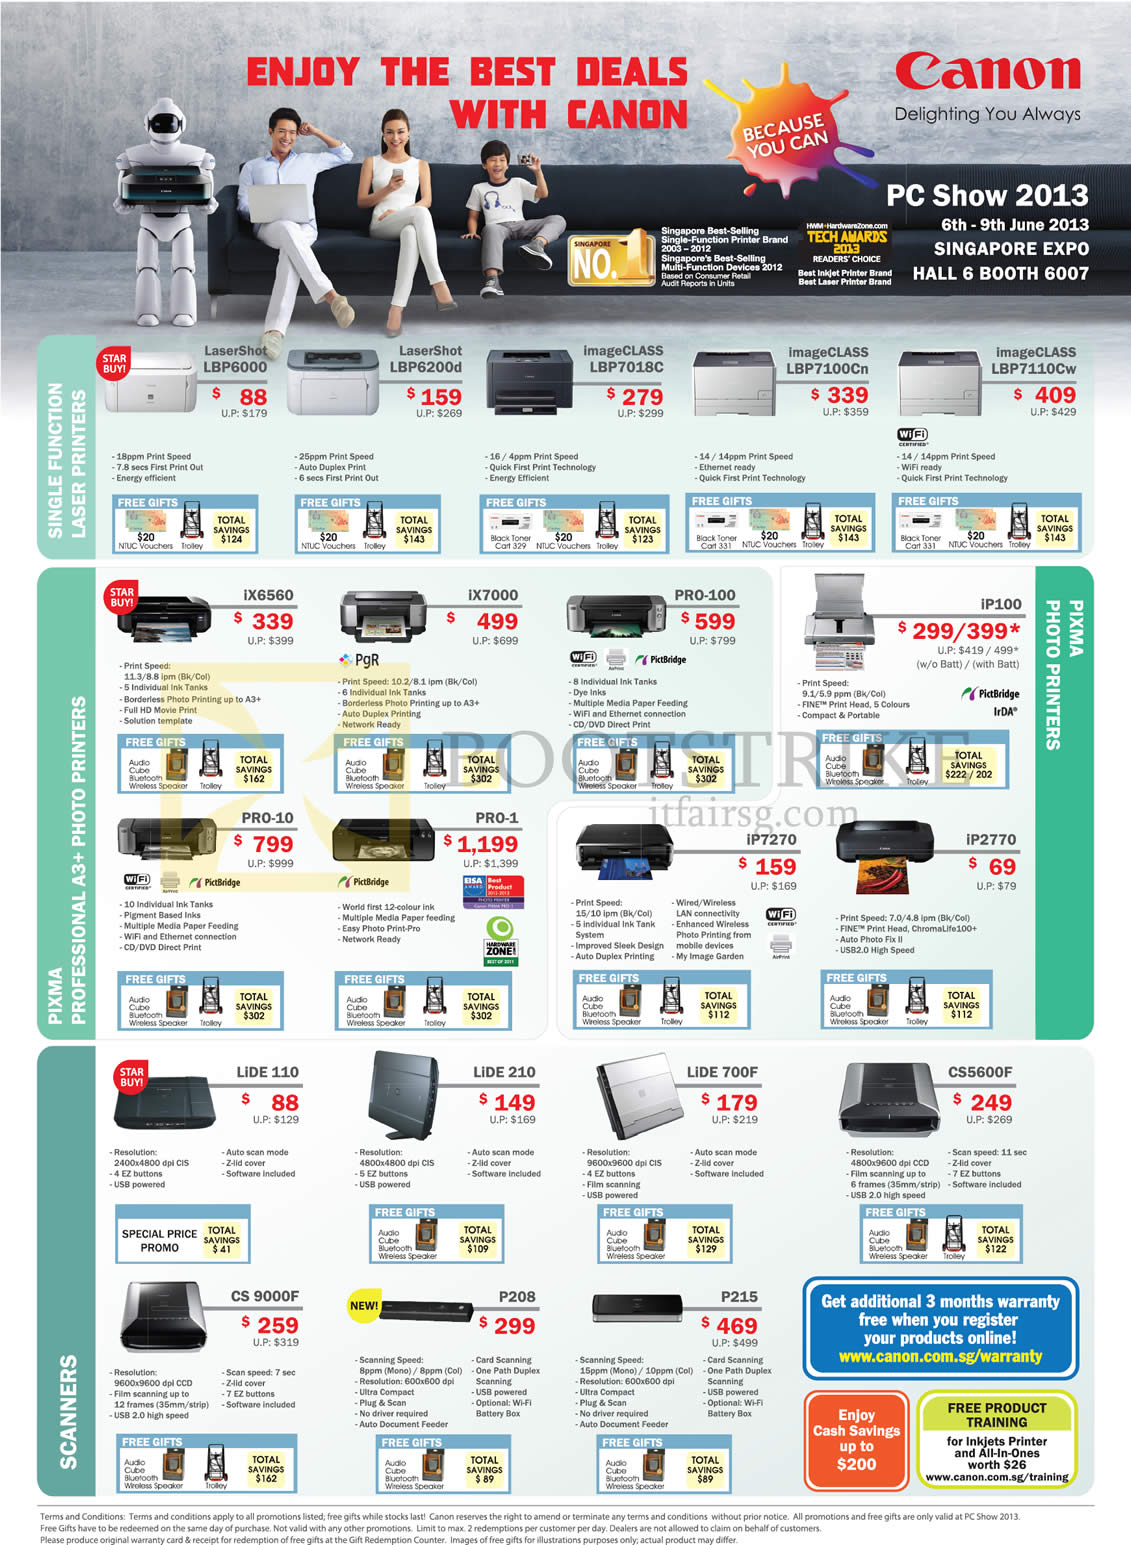 PC SHOW 2013 price list image brochure of Canon Printers Scanners LaserShot, LBP6000, LBP7100Cn, LBP7110Cw, IX6560, IX7000, PRO-100, IPlOO, IP7270, PRO-1, PRO-10, LiDE 110, 210, 700F, P208, CS 9000F